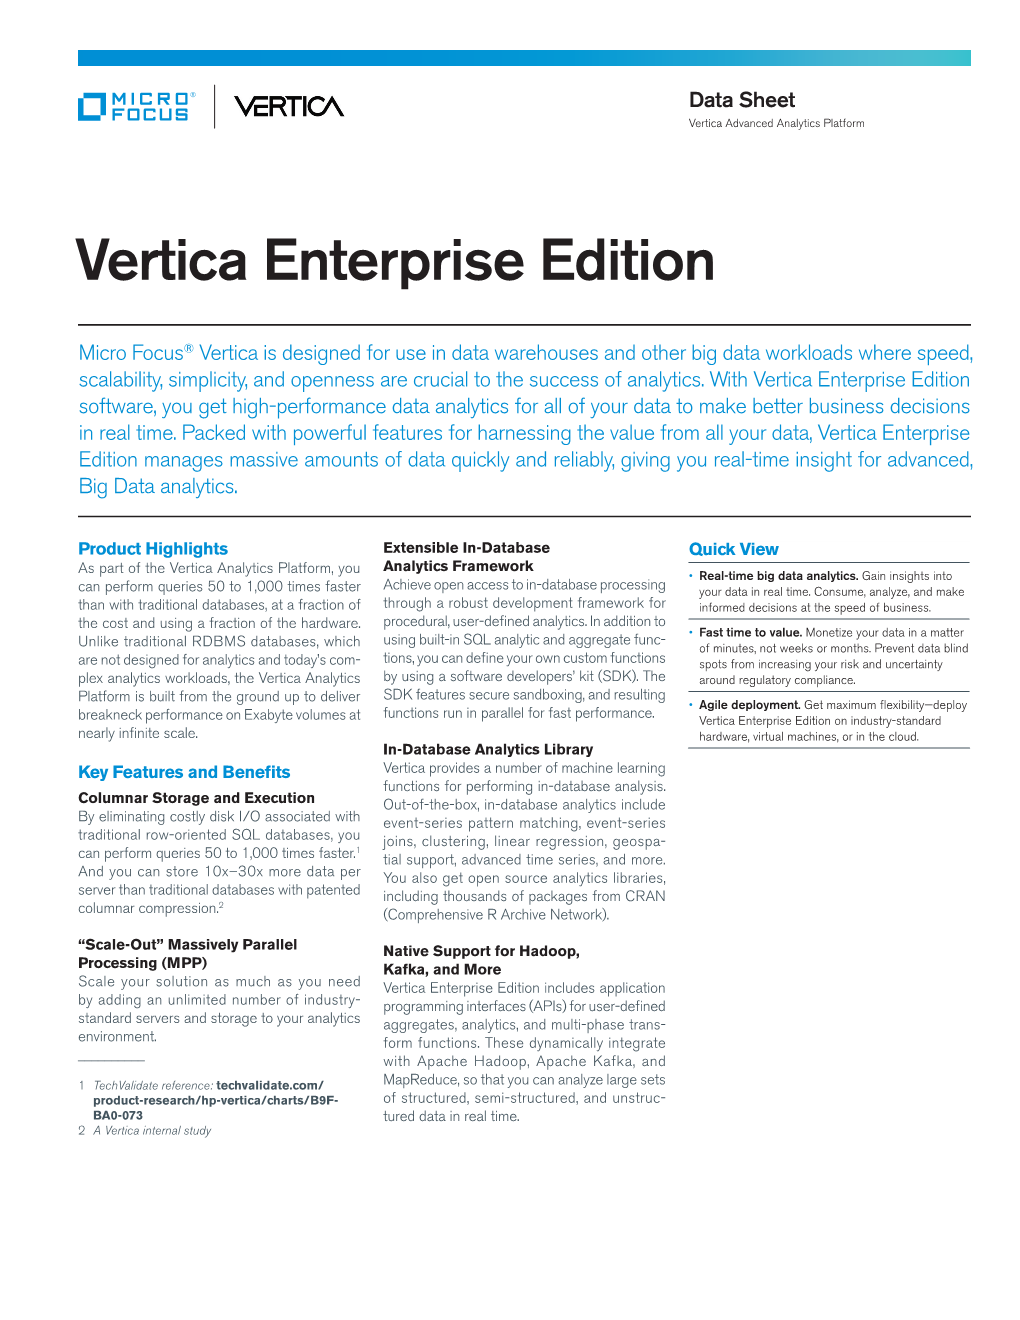 Vertica Enterprise Edition